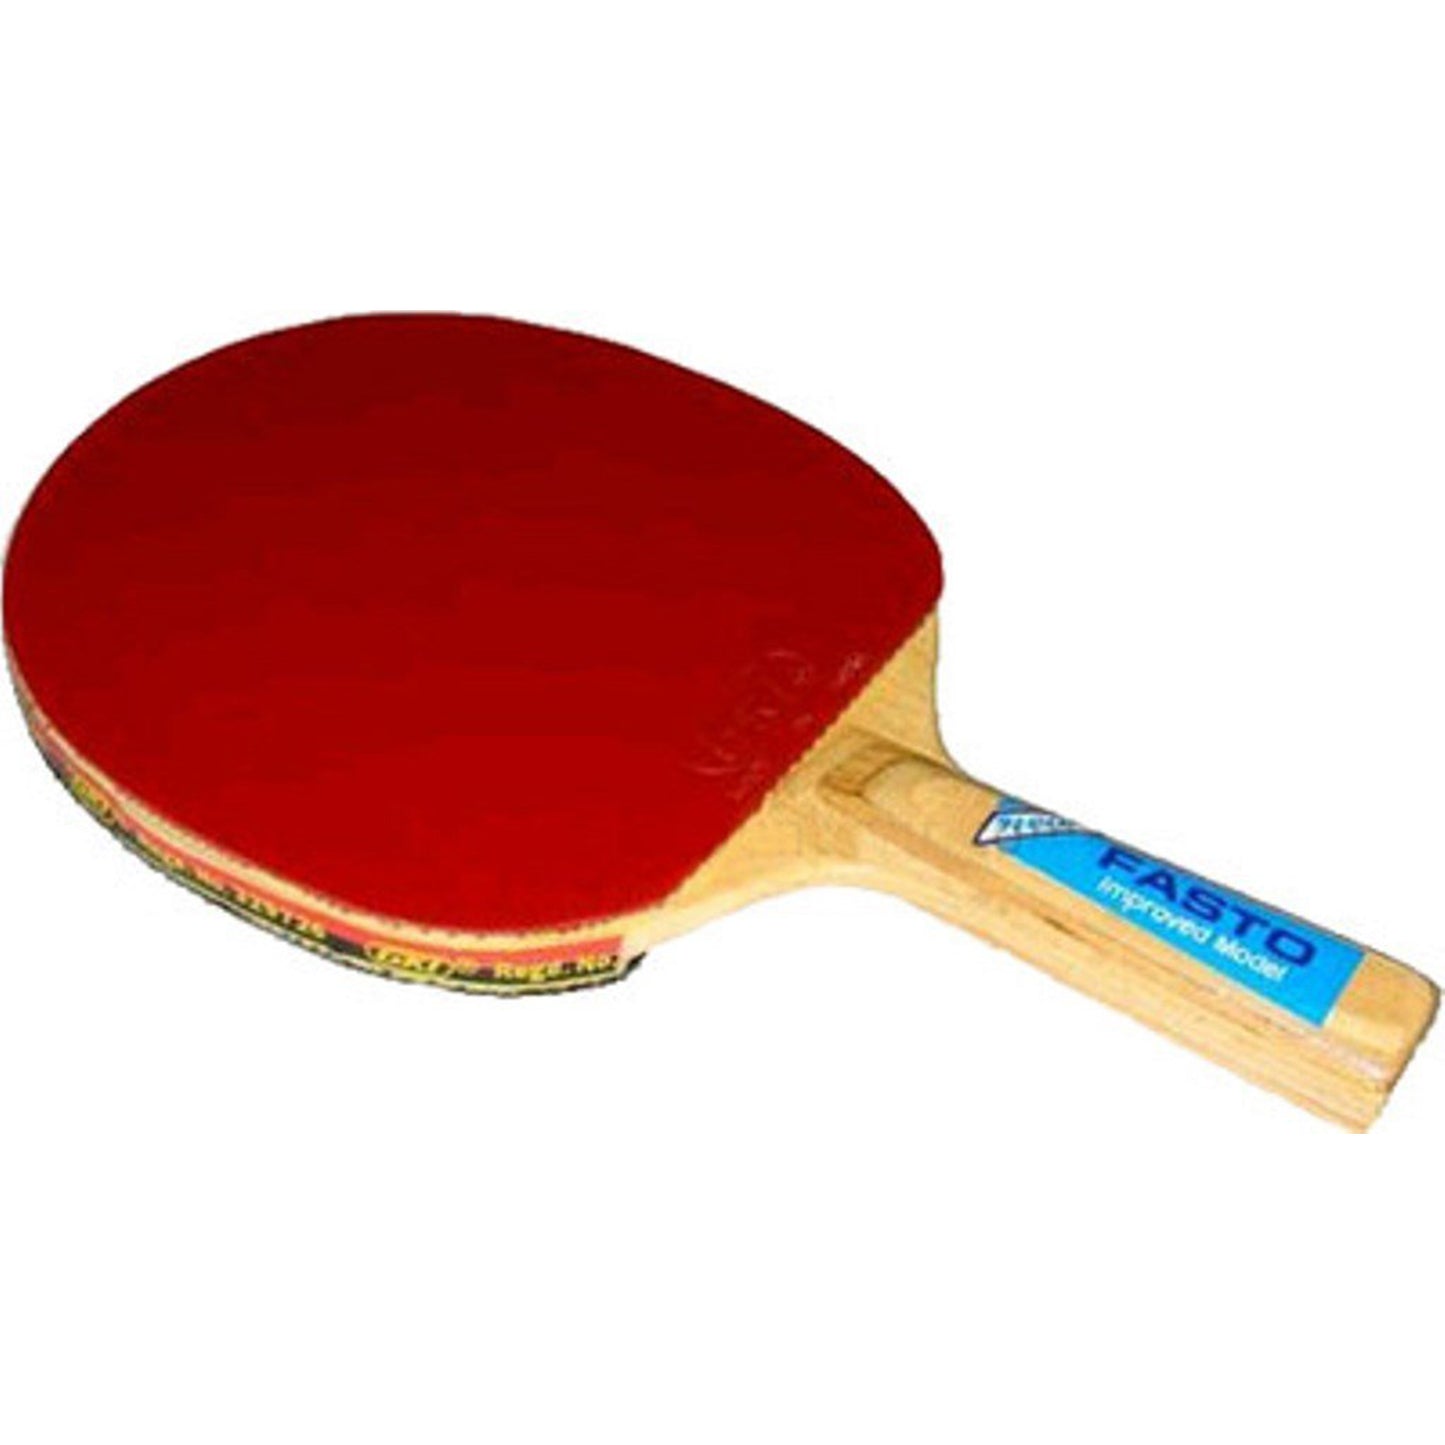 GKI Fasto Table Tennis Racquet - Best Price online Prokicksports.com